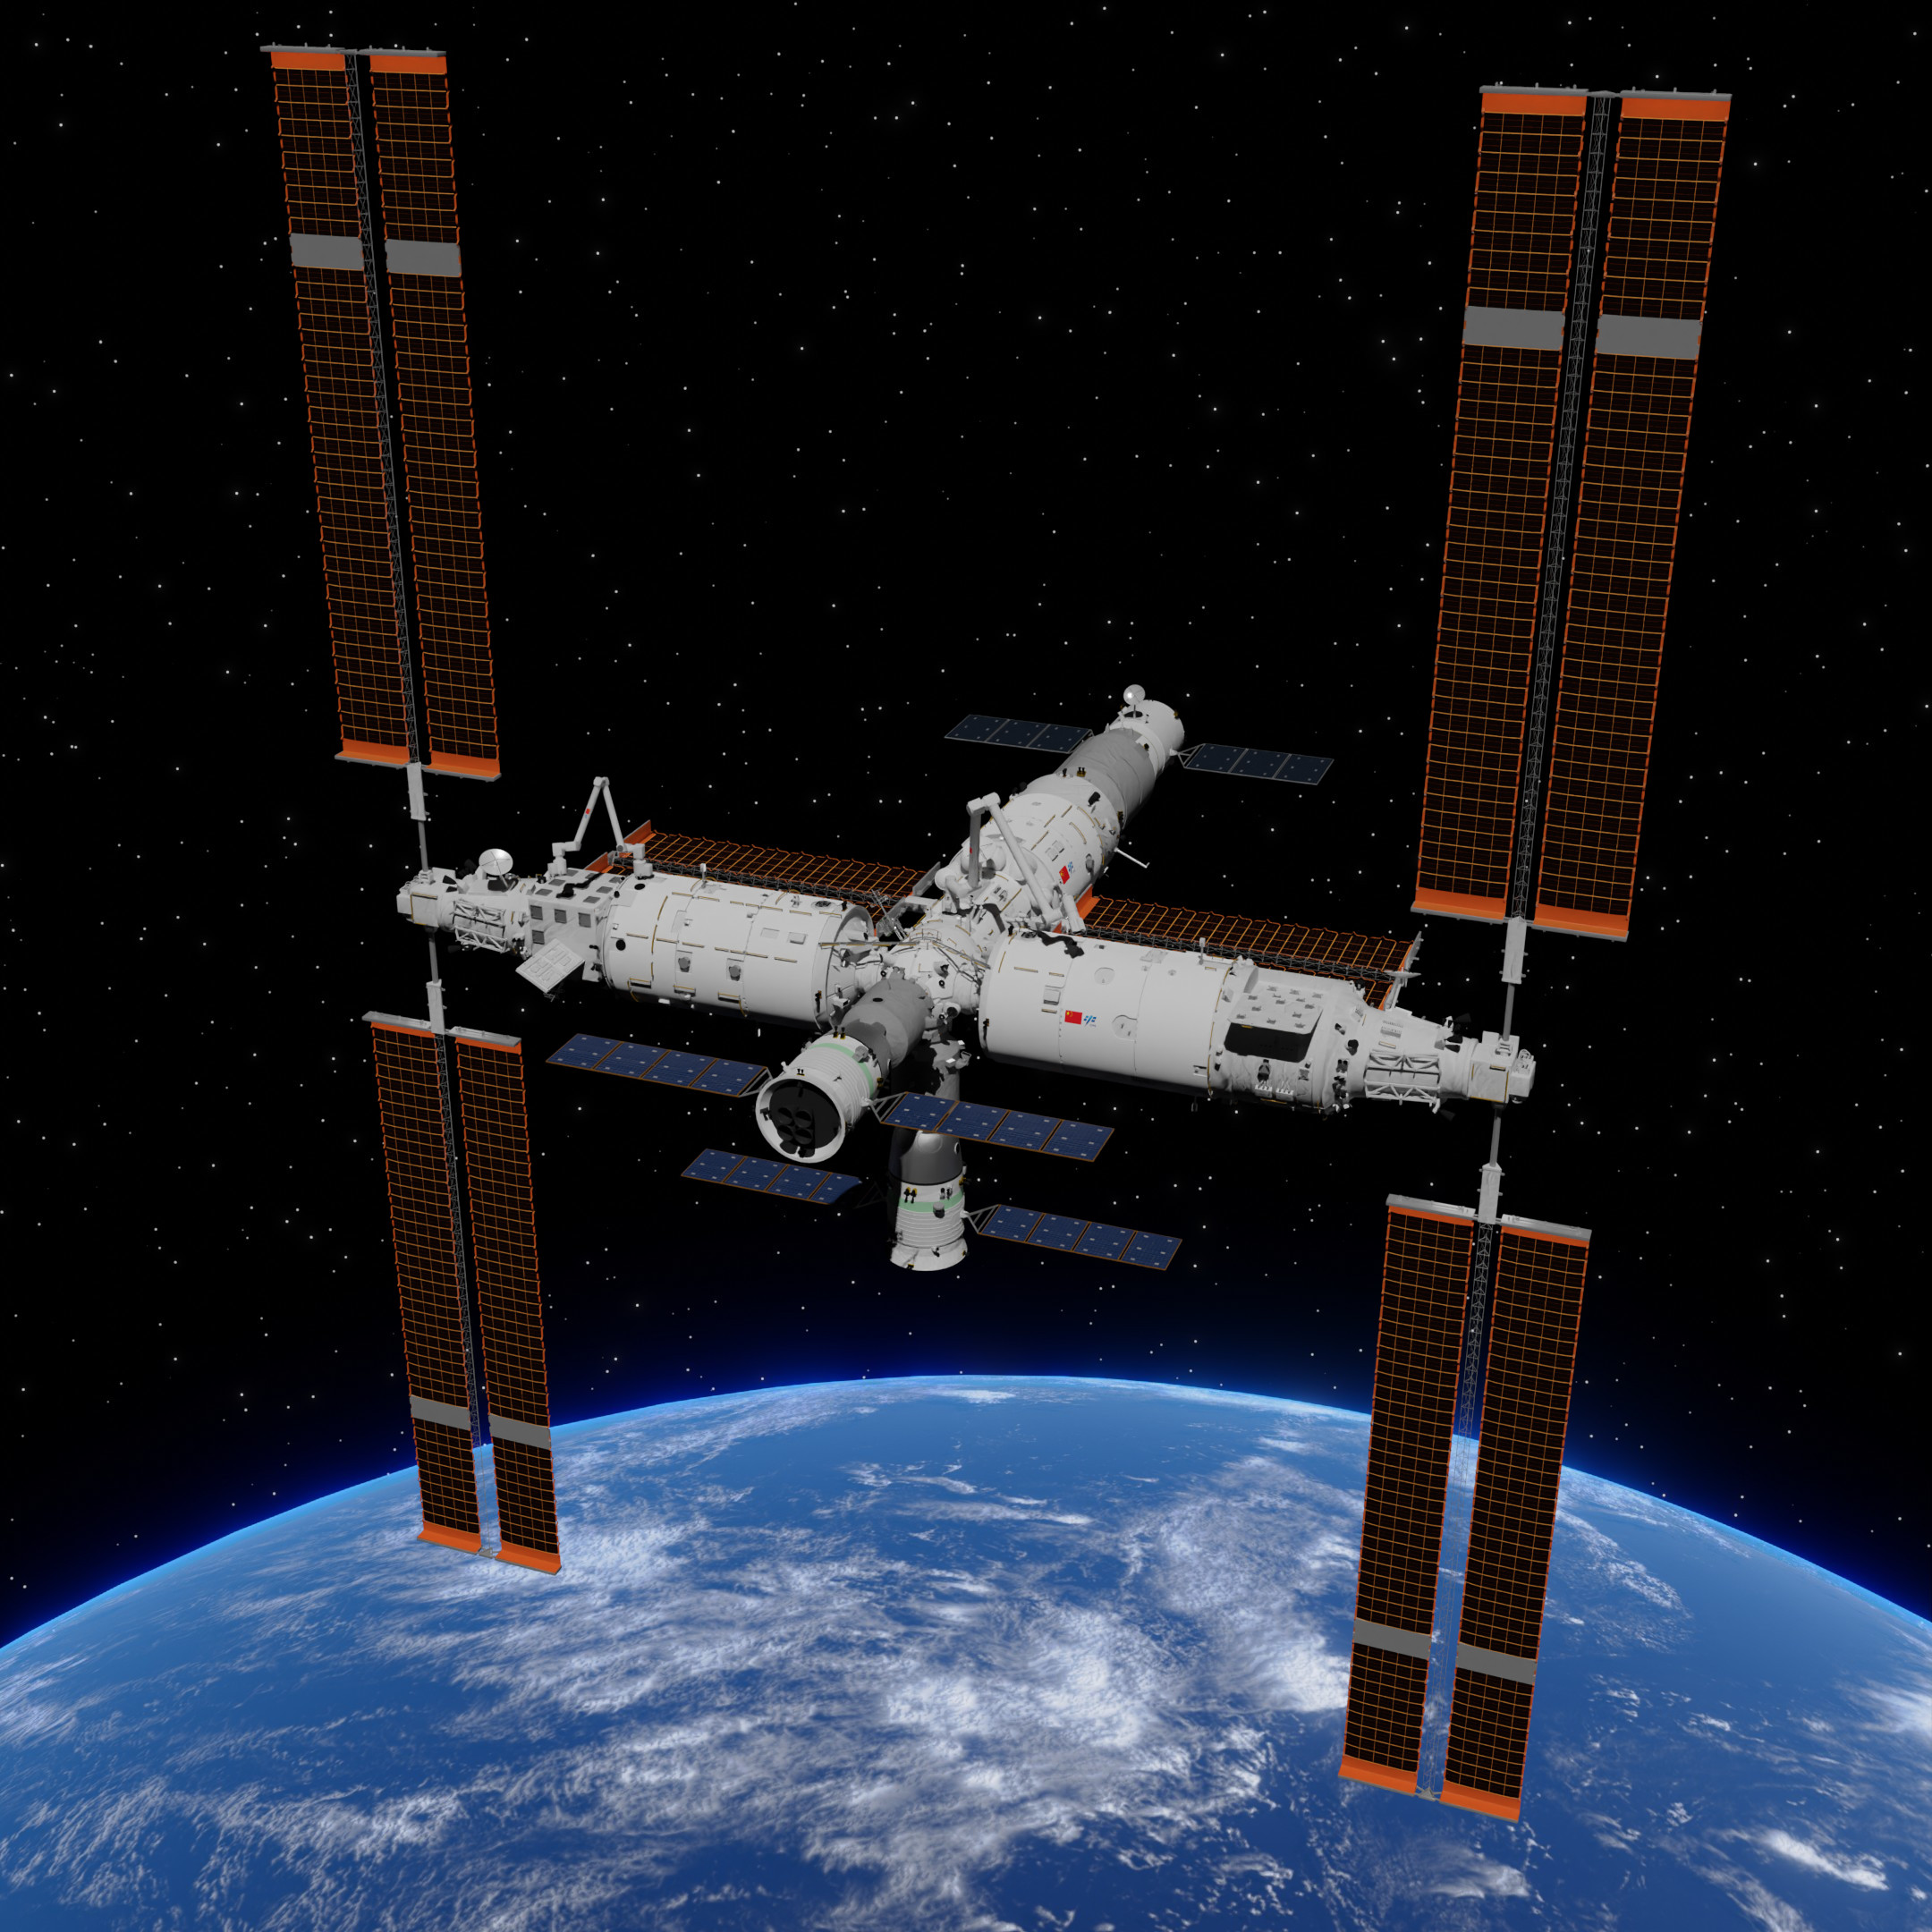 Tiangong space station - Wikipedia